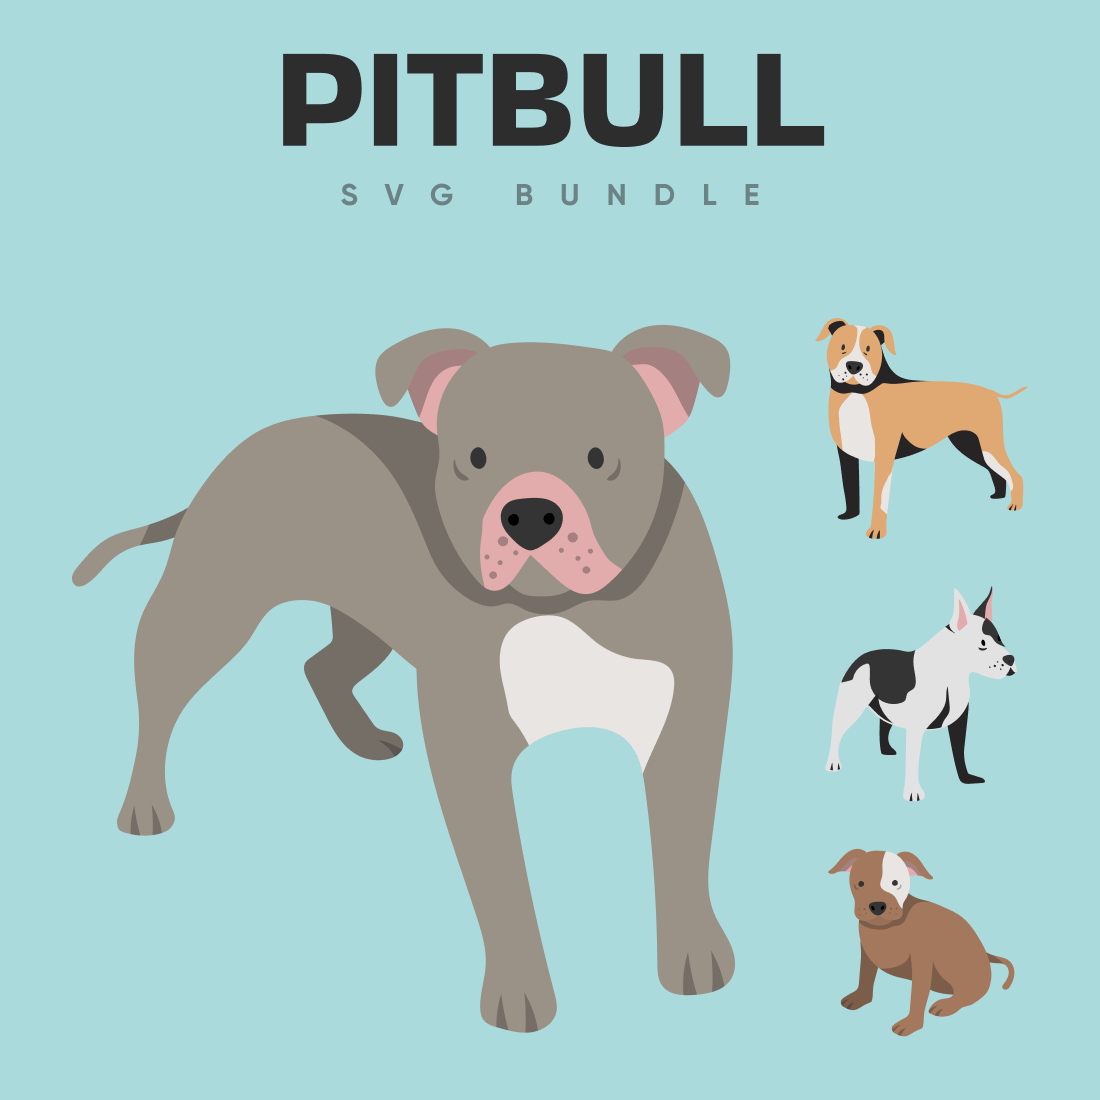 Pitbull SVG bundle.